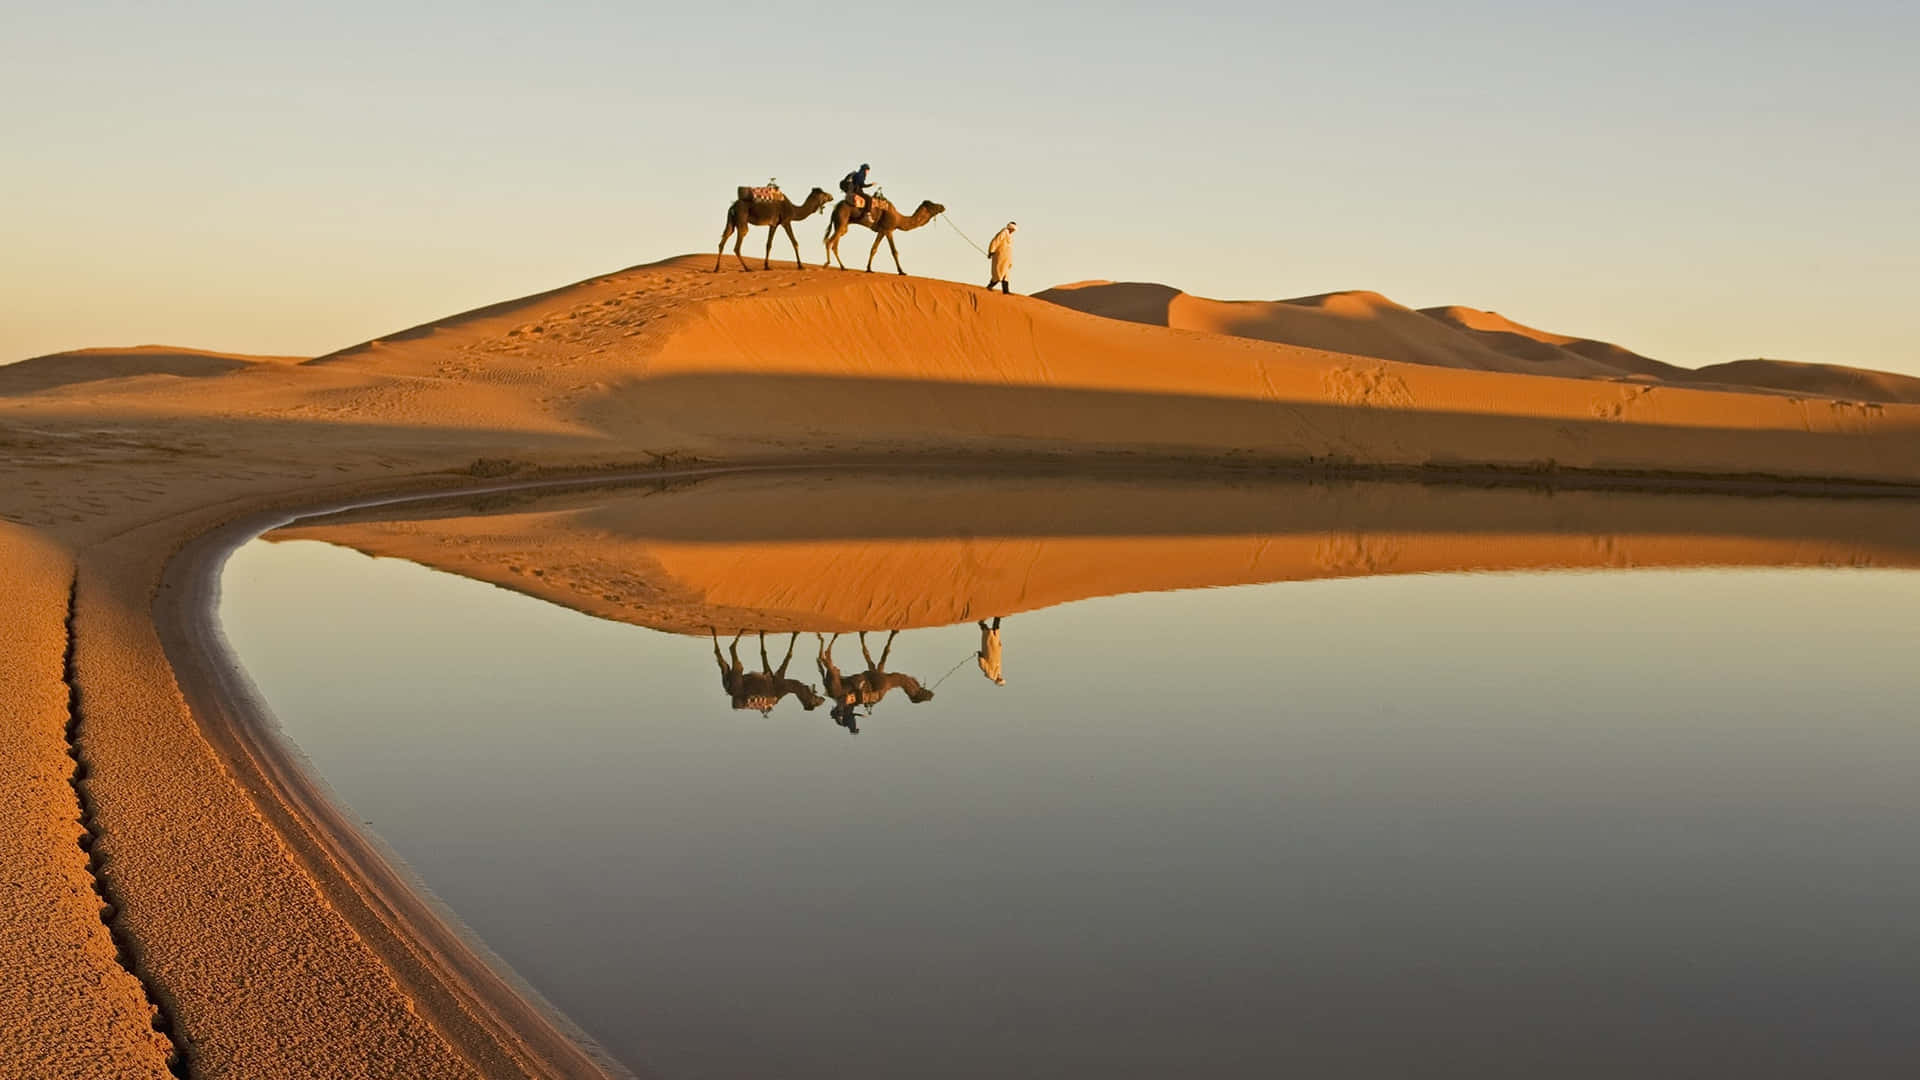 Admiring the beauty of the Imposing Desert